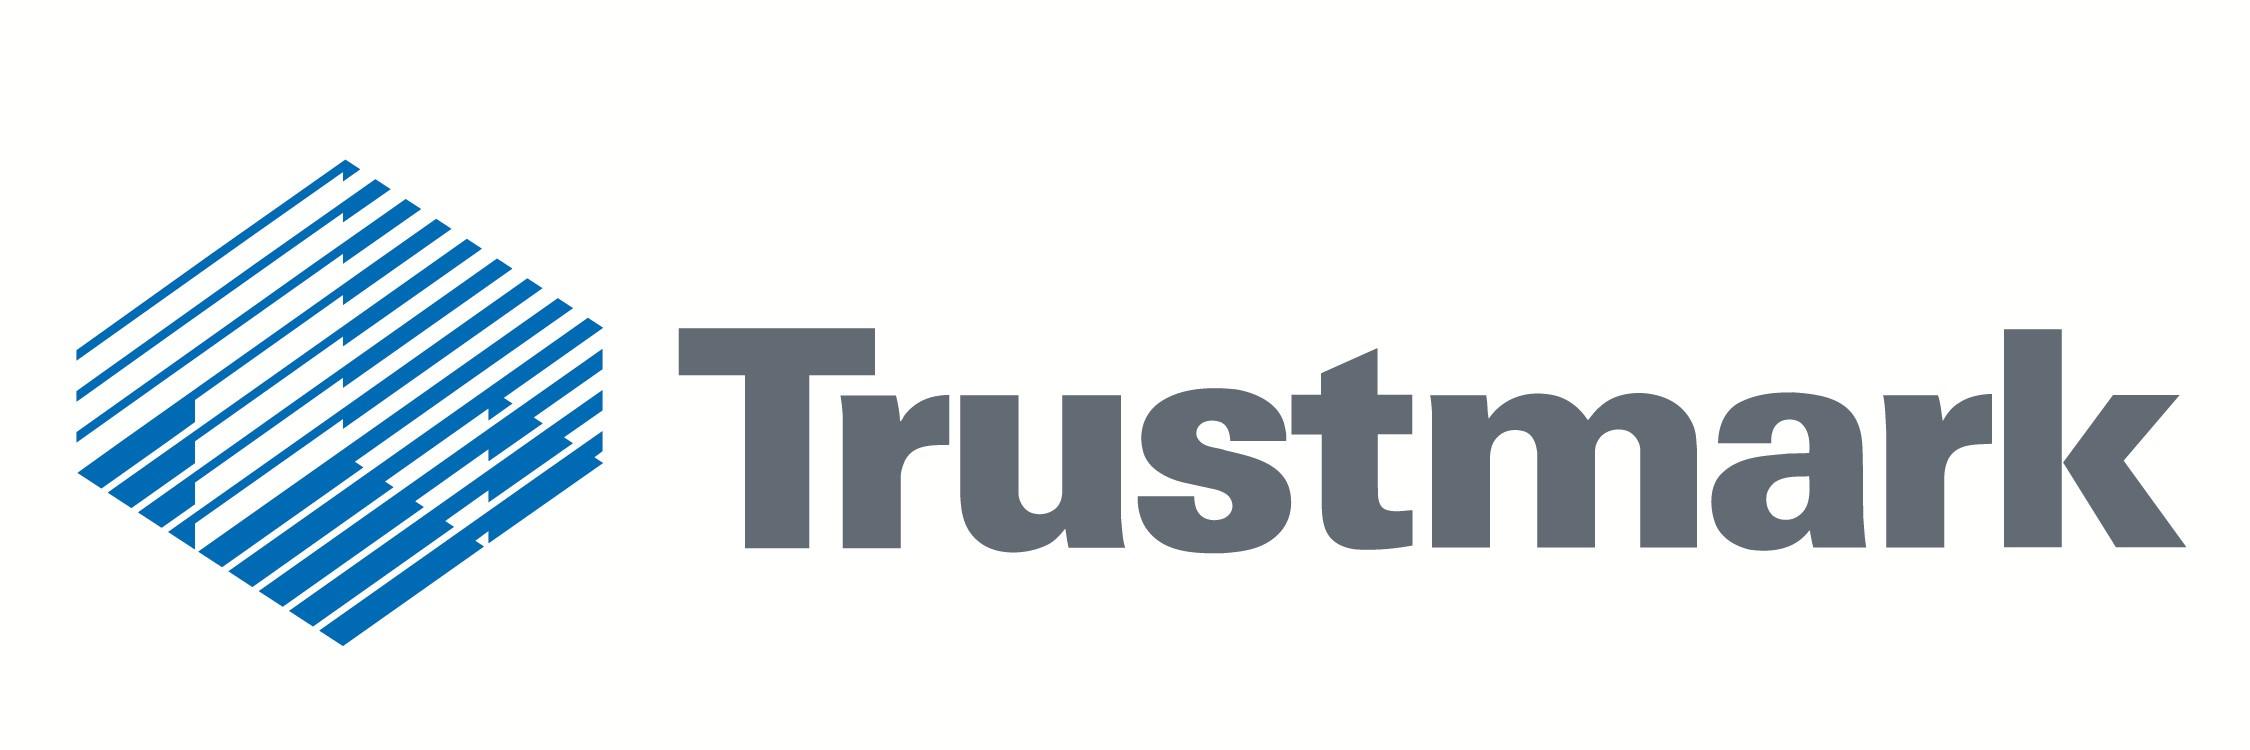 Trustmark-logo